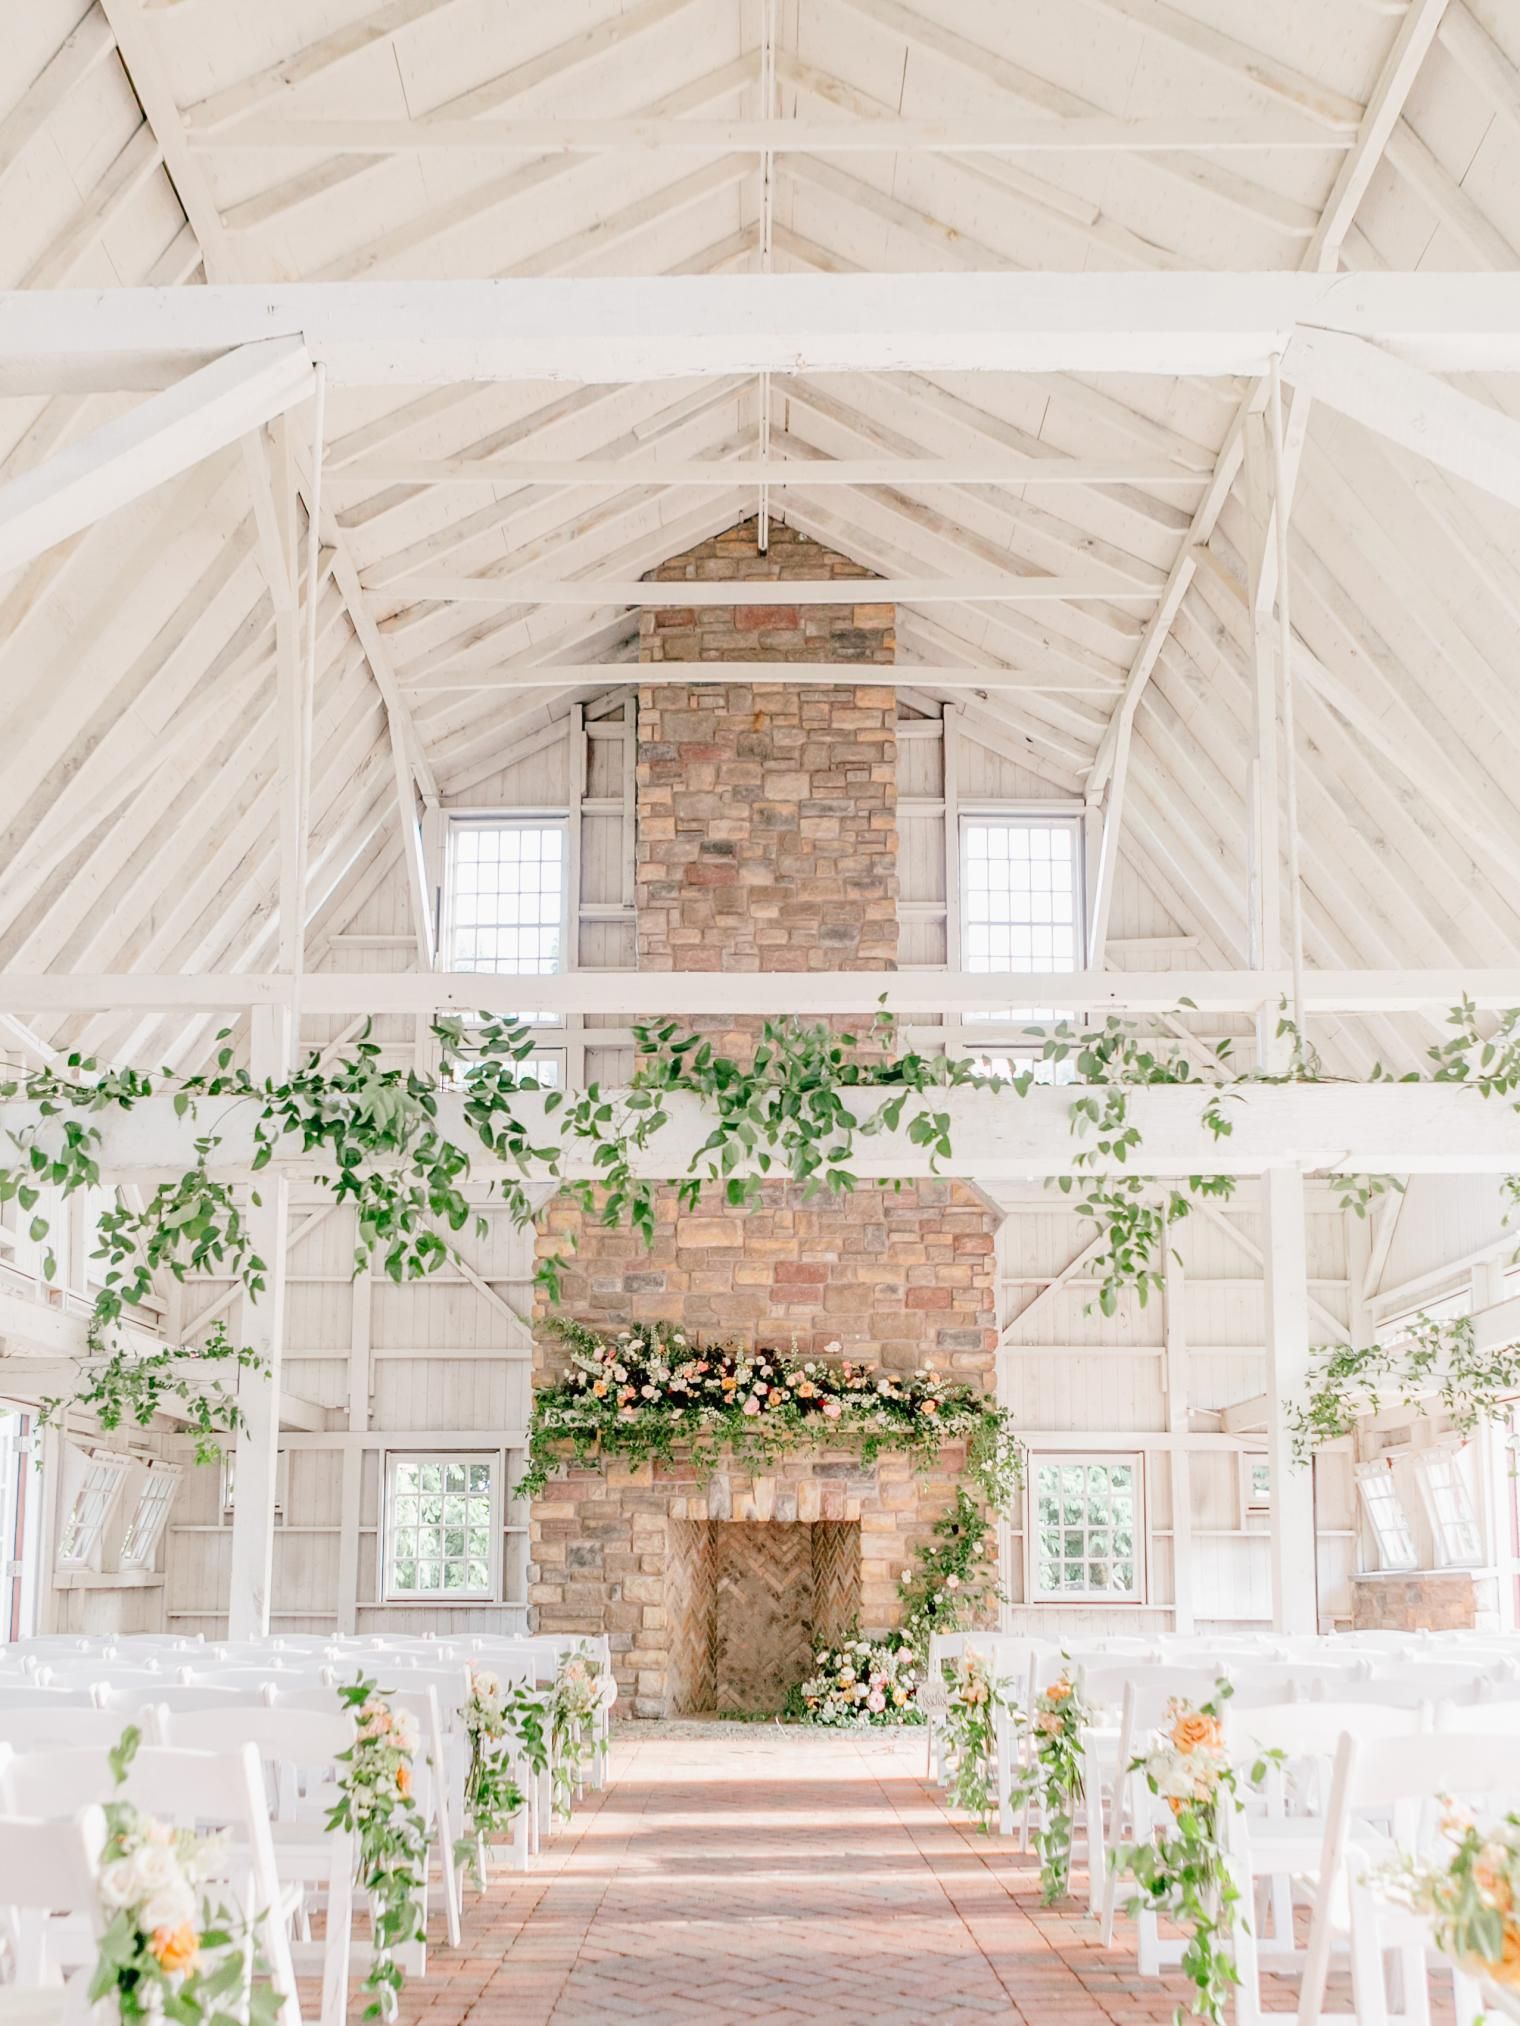 40 Rustic Barn Wedding Venues Charming Country Wedding Venues